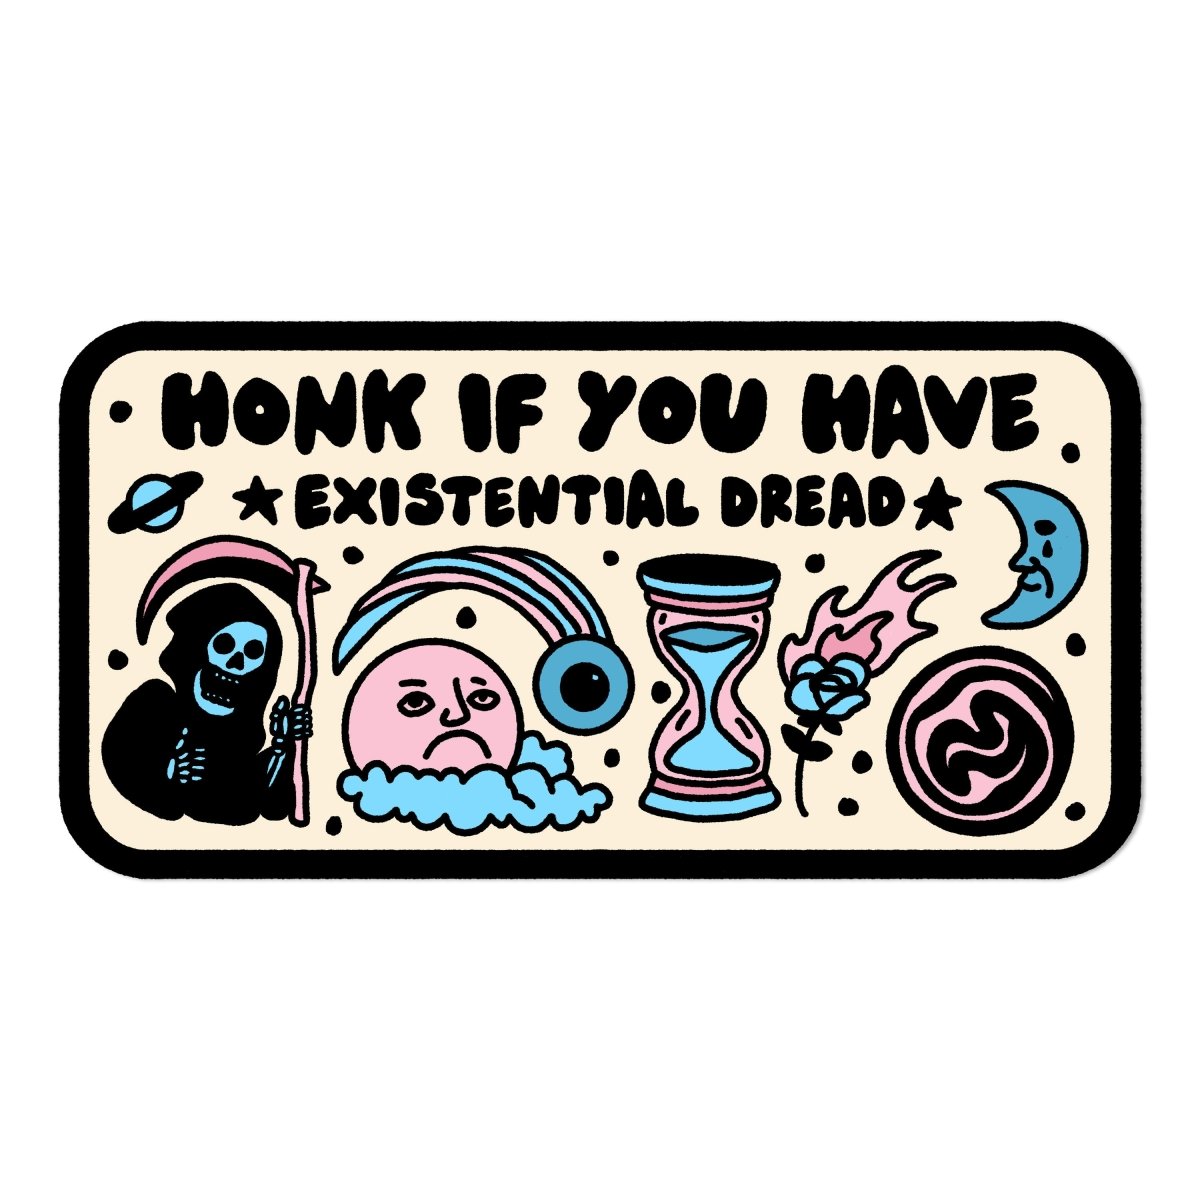 Honk if you have existential dread bumper sticker - Sticker - Pretty Bad Co.